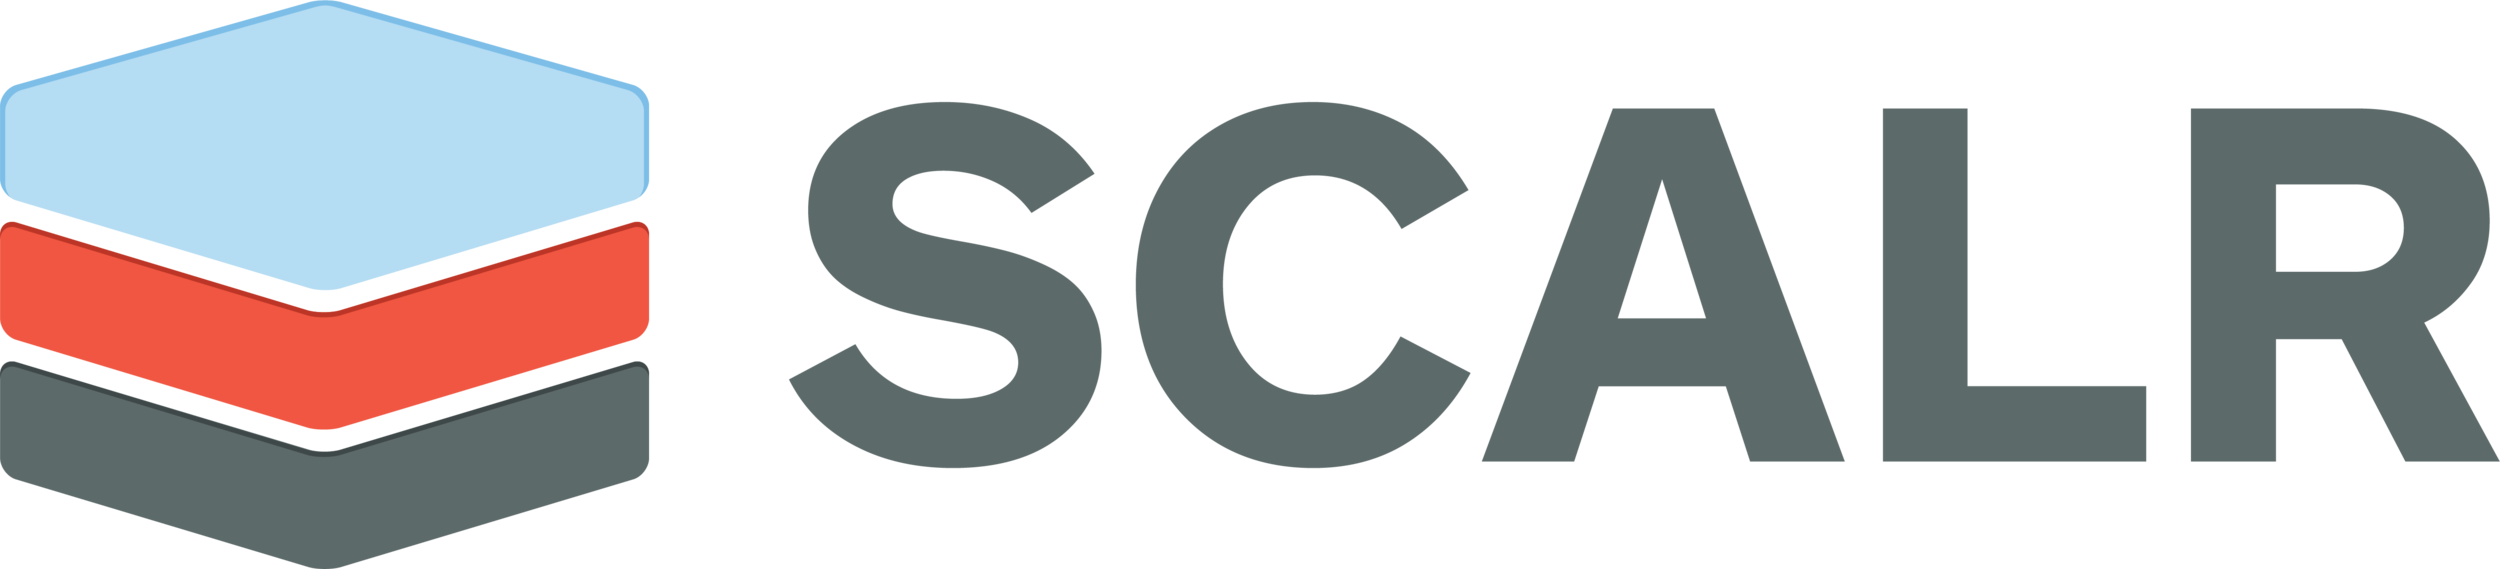 scalr logo.png